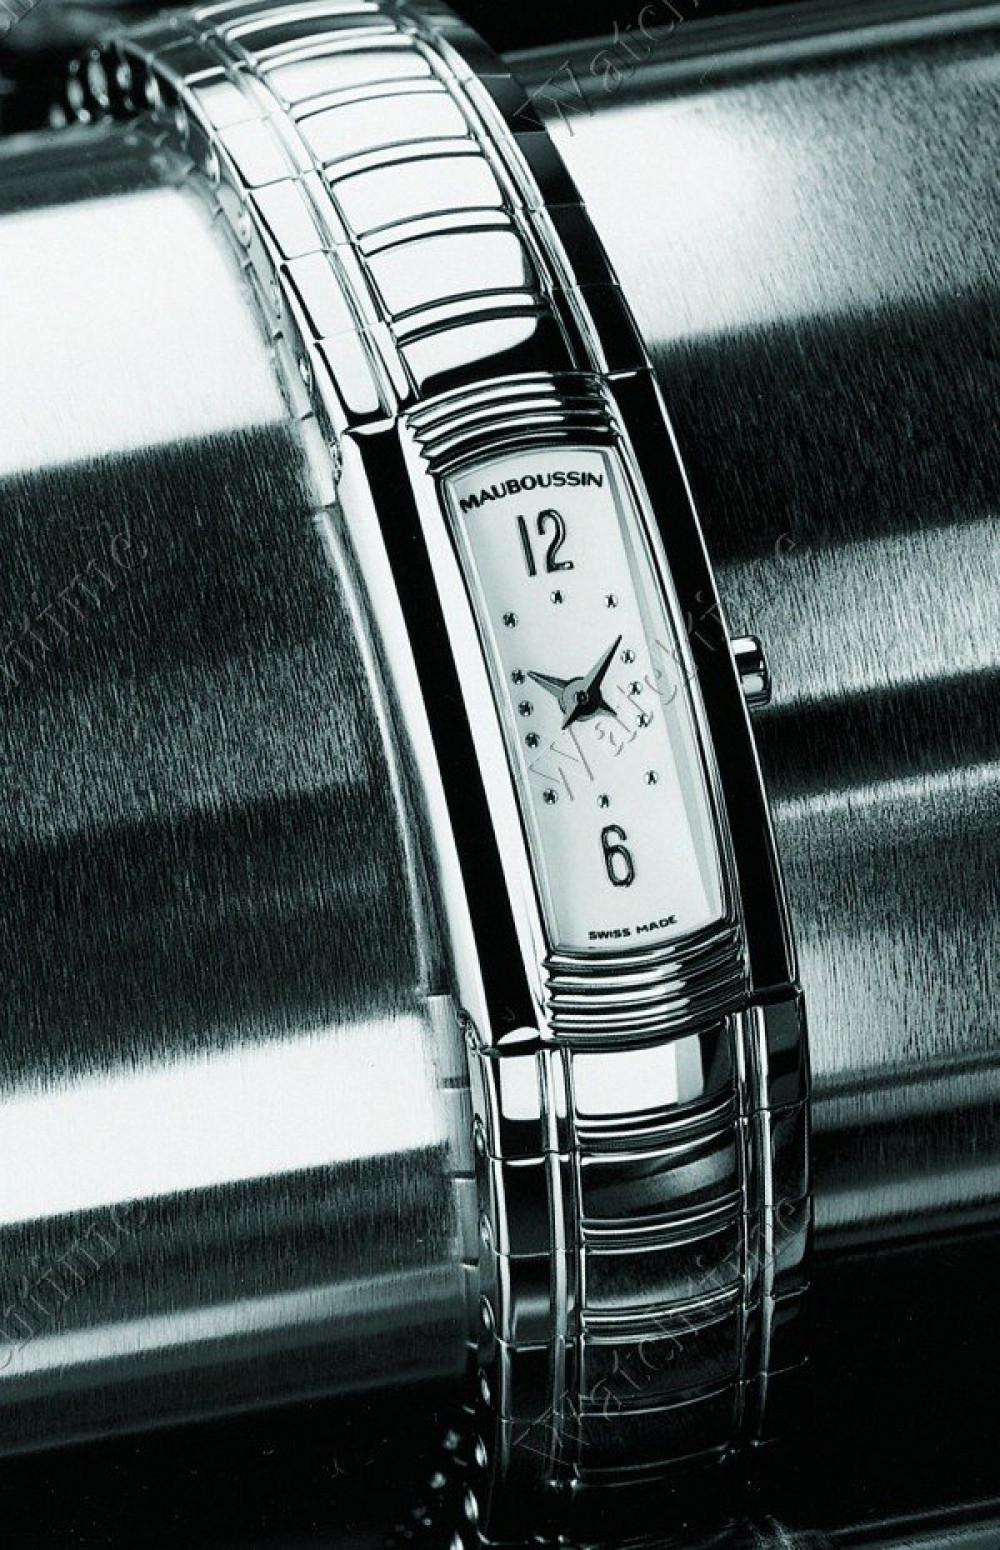 Zegarek firmy Mauboussin, model Lady M Mini